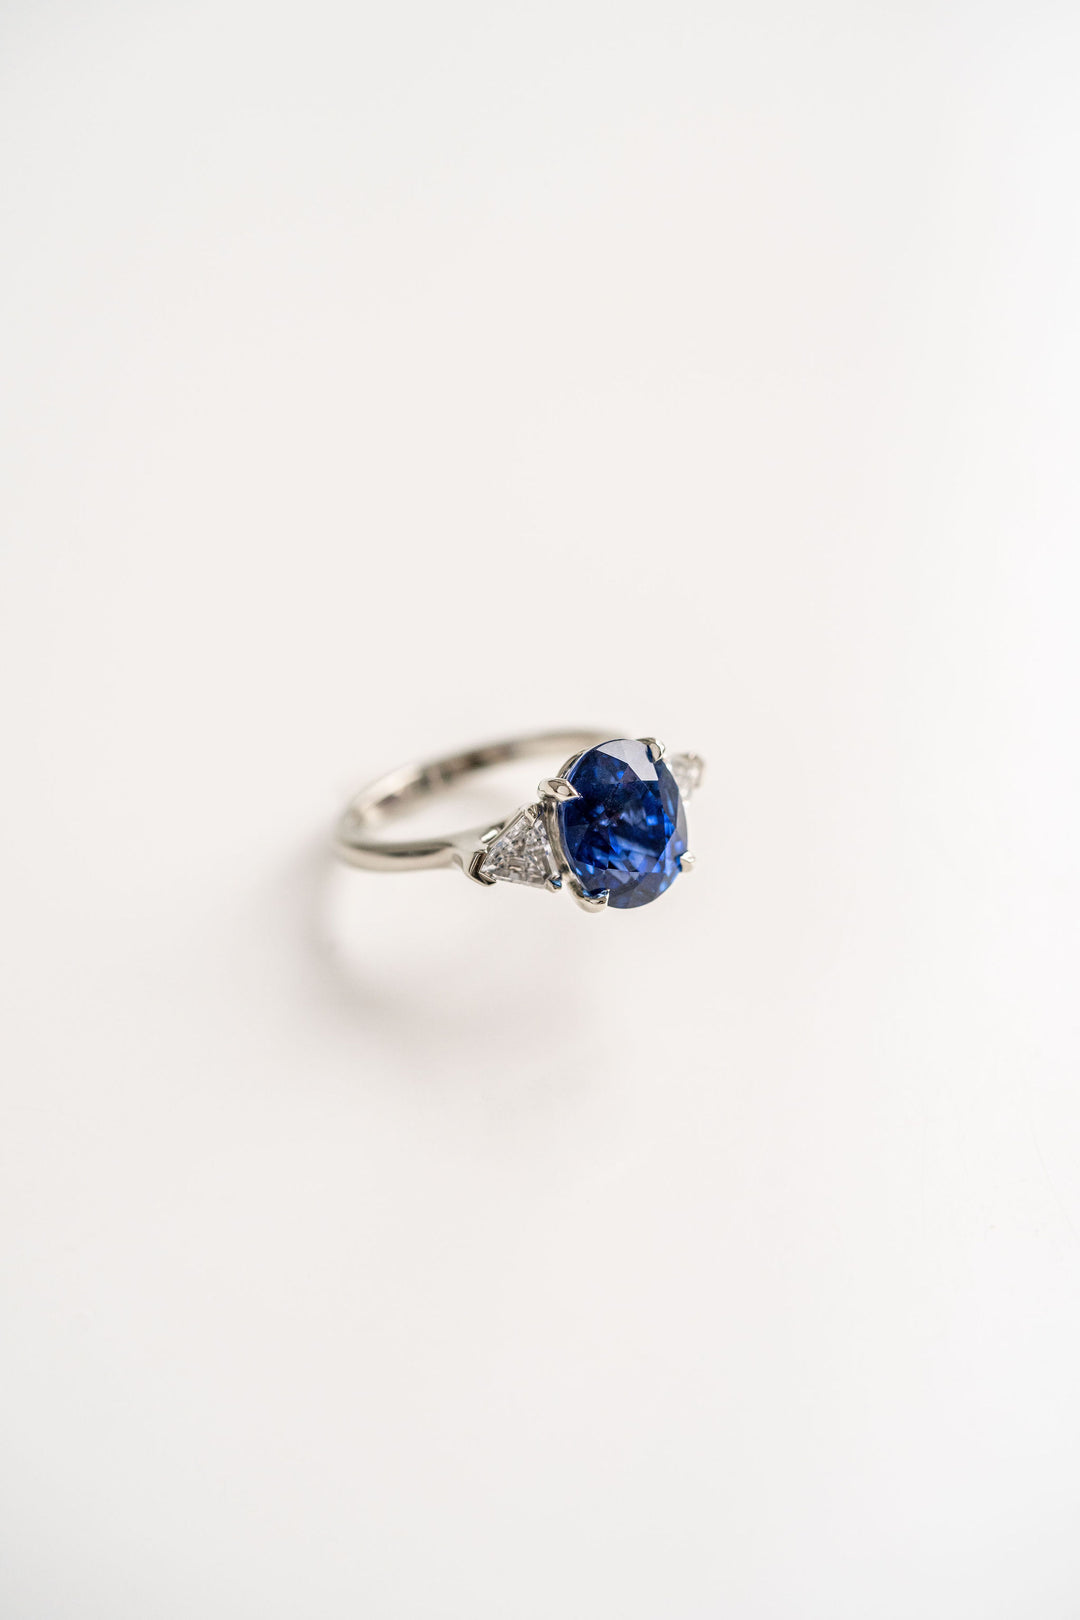 5.06ct. Blue Oval Sri Lankan Sapphire With Shield Shape Diamond Accents, 14k White Gold